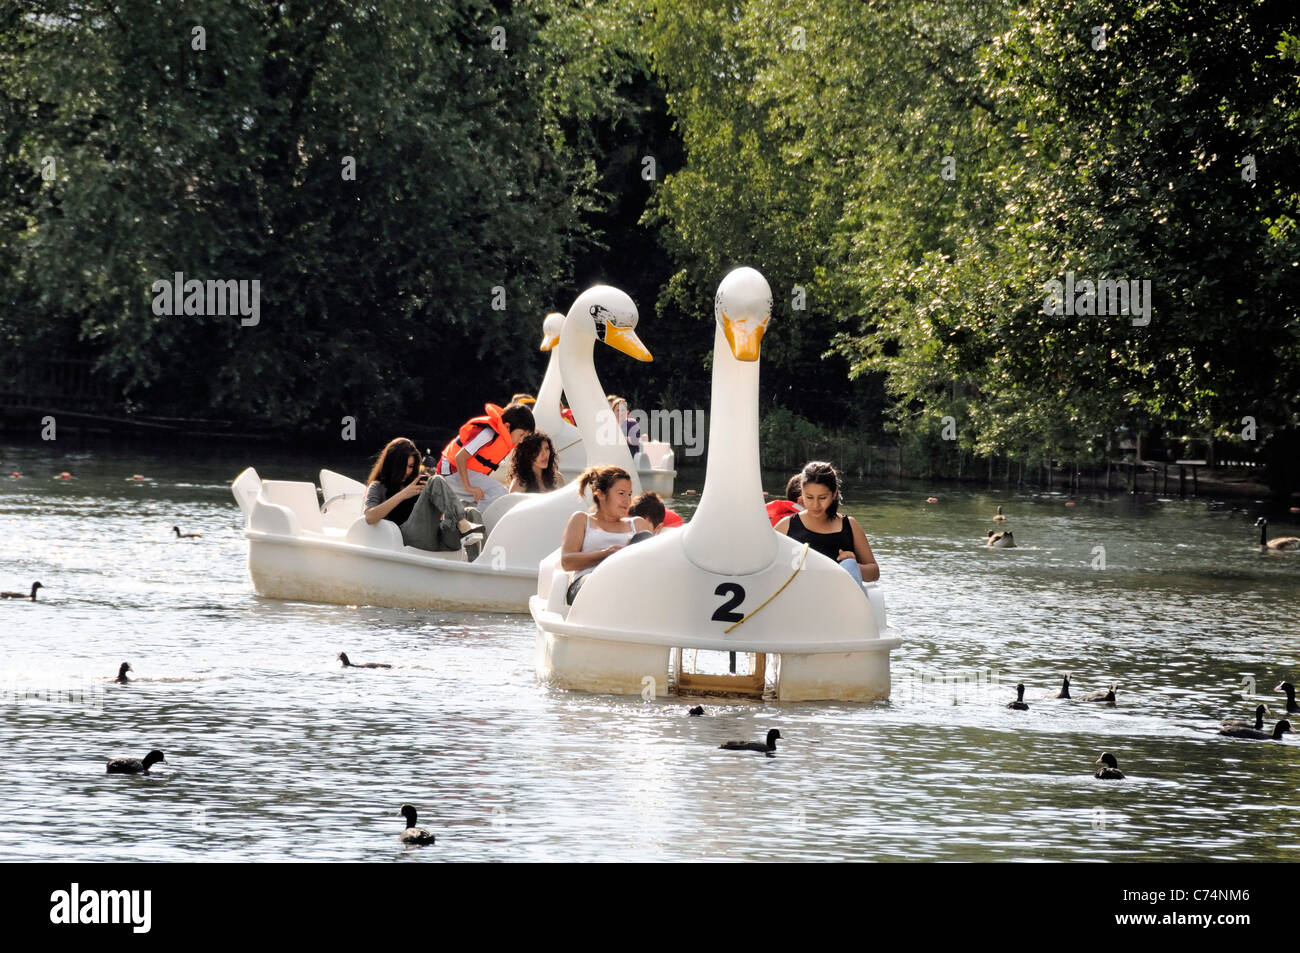 People enjoying themselves in swan shaped pedalos or pedal boats Alexandra Palace Park boating lake London England UK Stock Photo